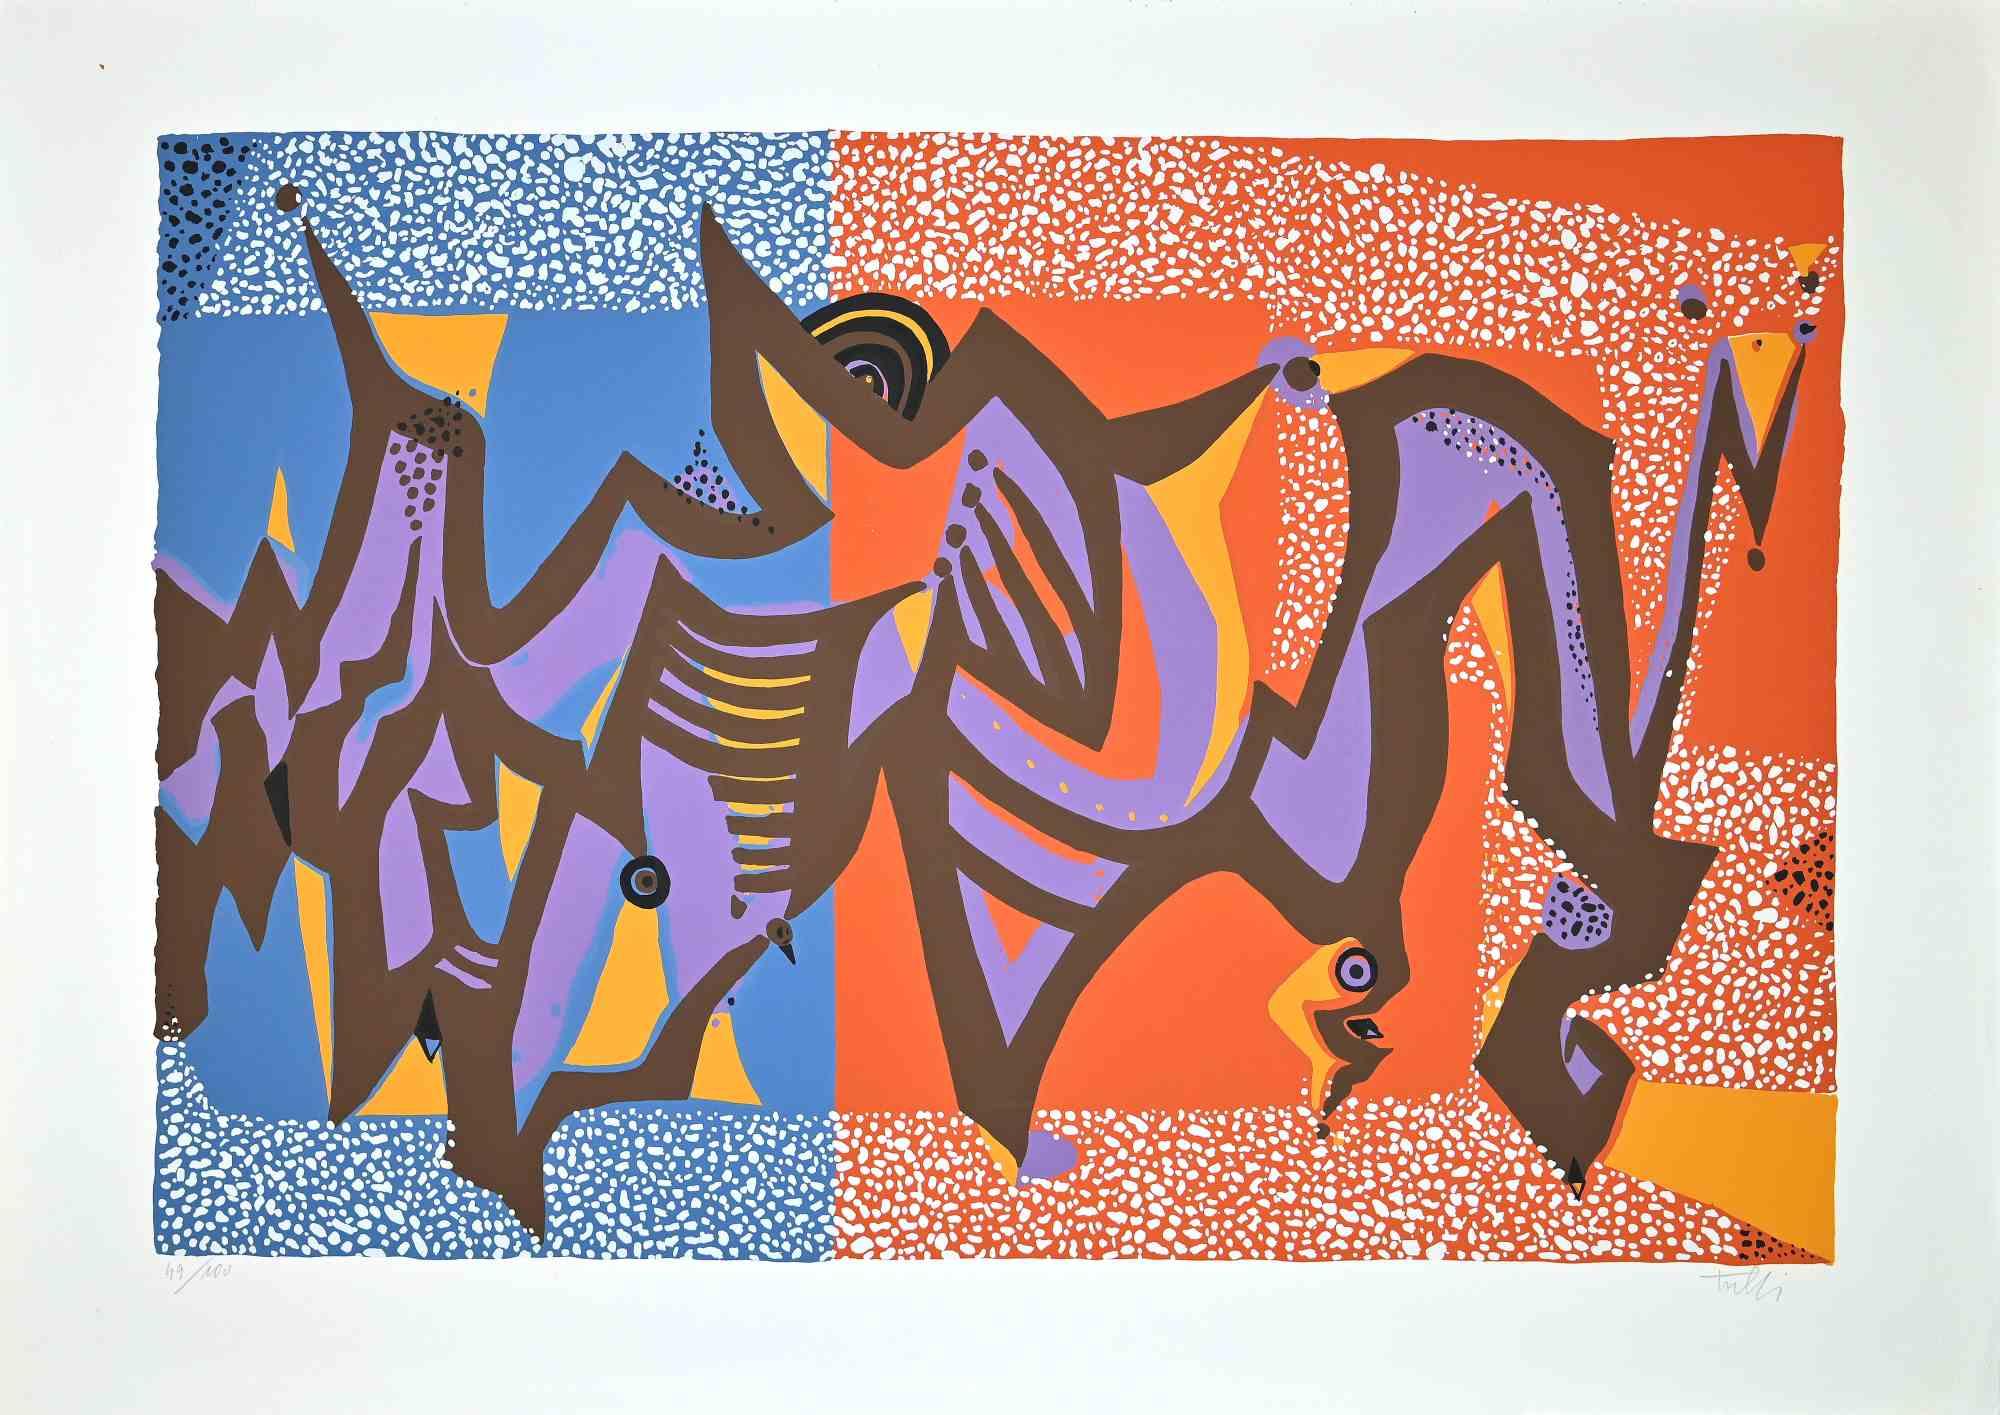 Carnivalesque Composition - Original Screen Print by Wladimiro Tulli - 1970s